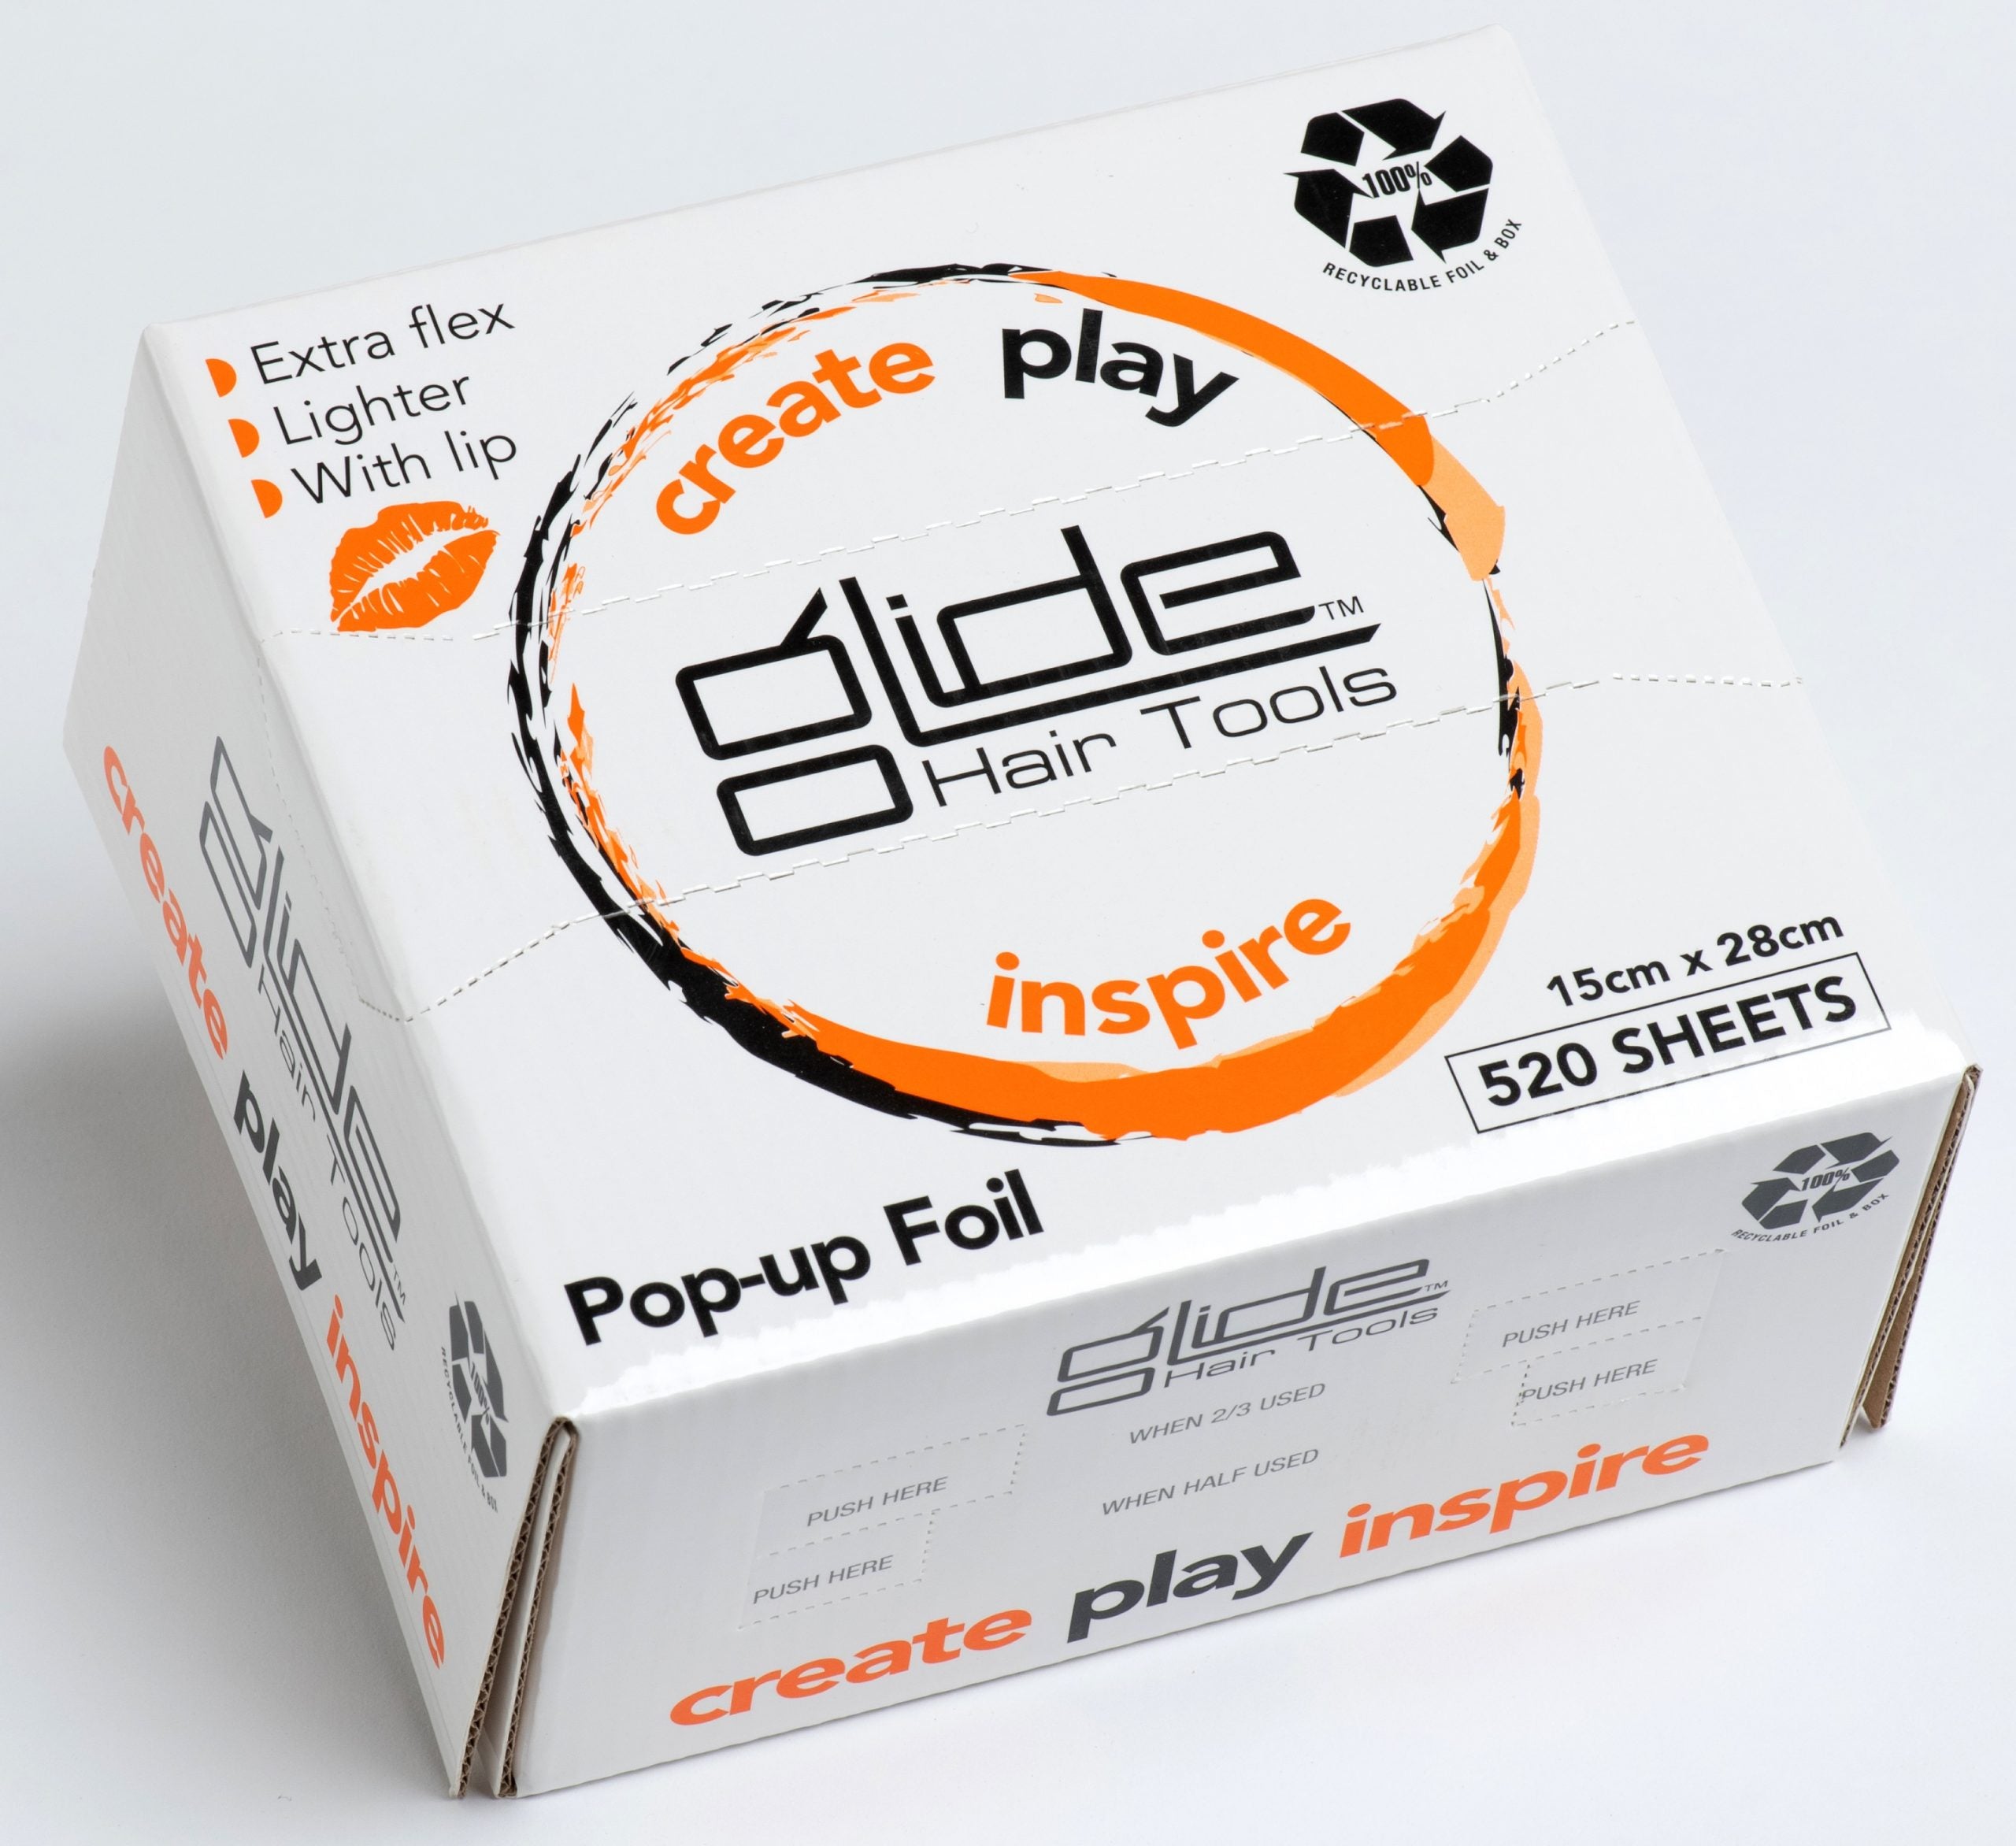 Glide Create Play Inspire Wide Pop-up  Foil 15cm x 28cm 520 sheets